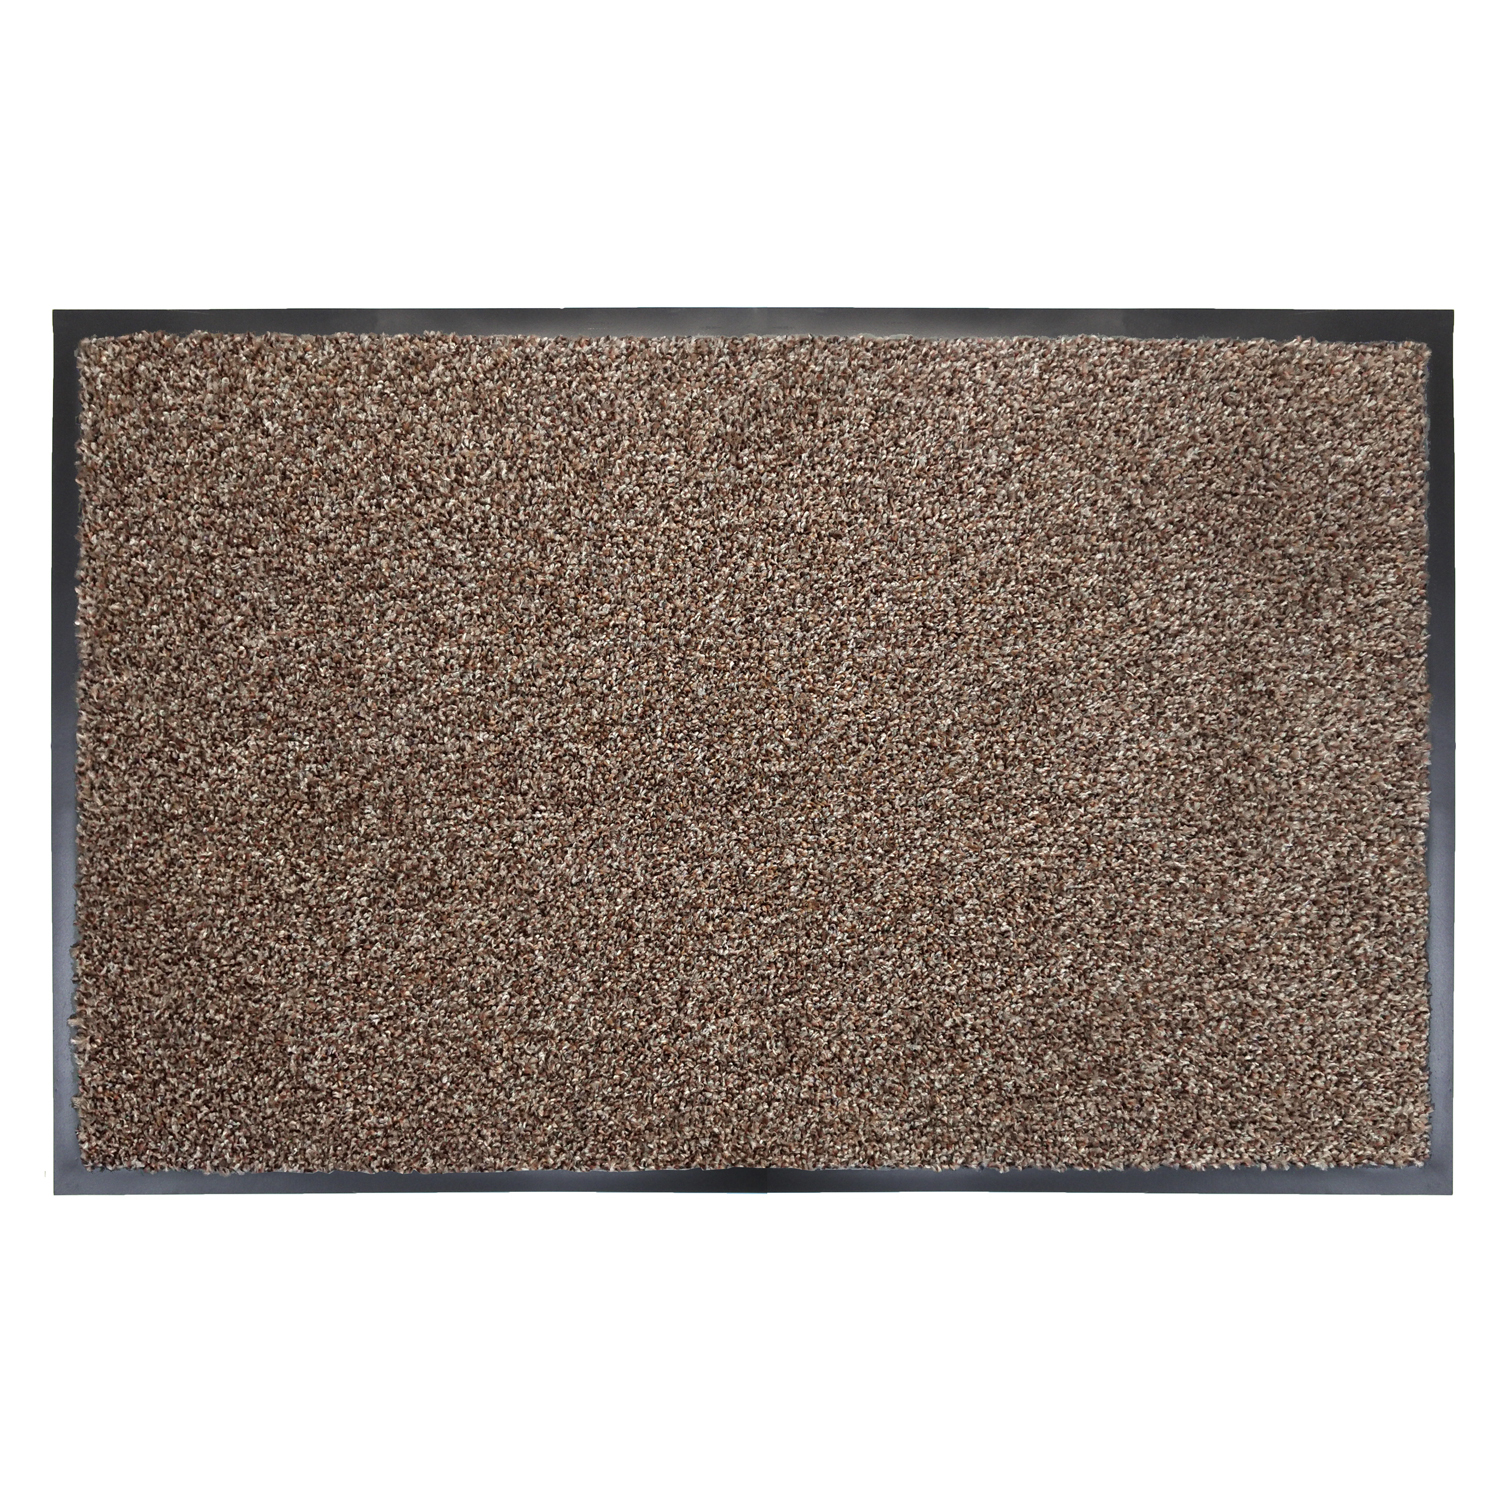 Single Primeur Mud Master Doormat 90 x 60cm in Assorted styles Image 1